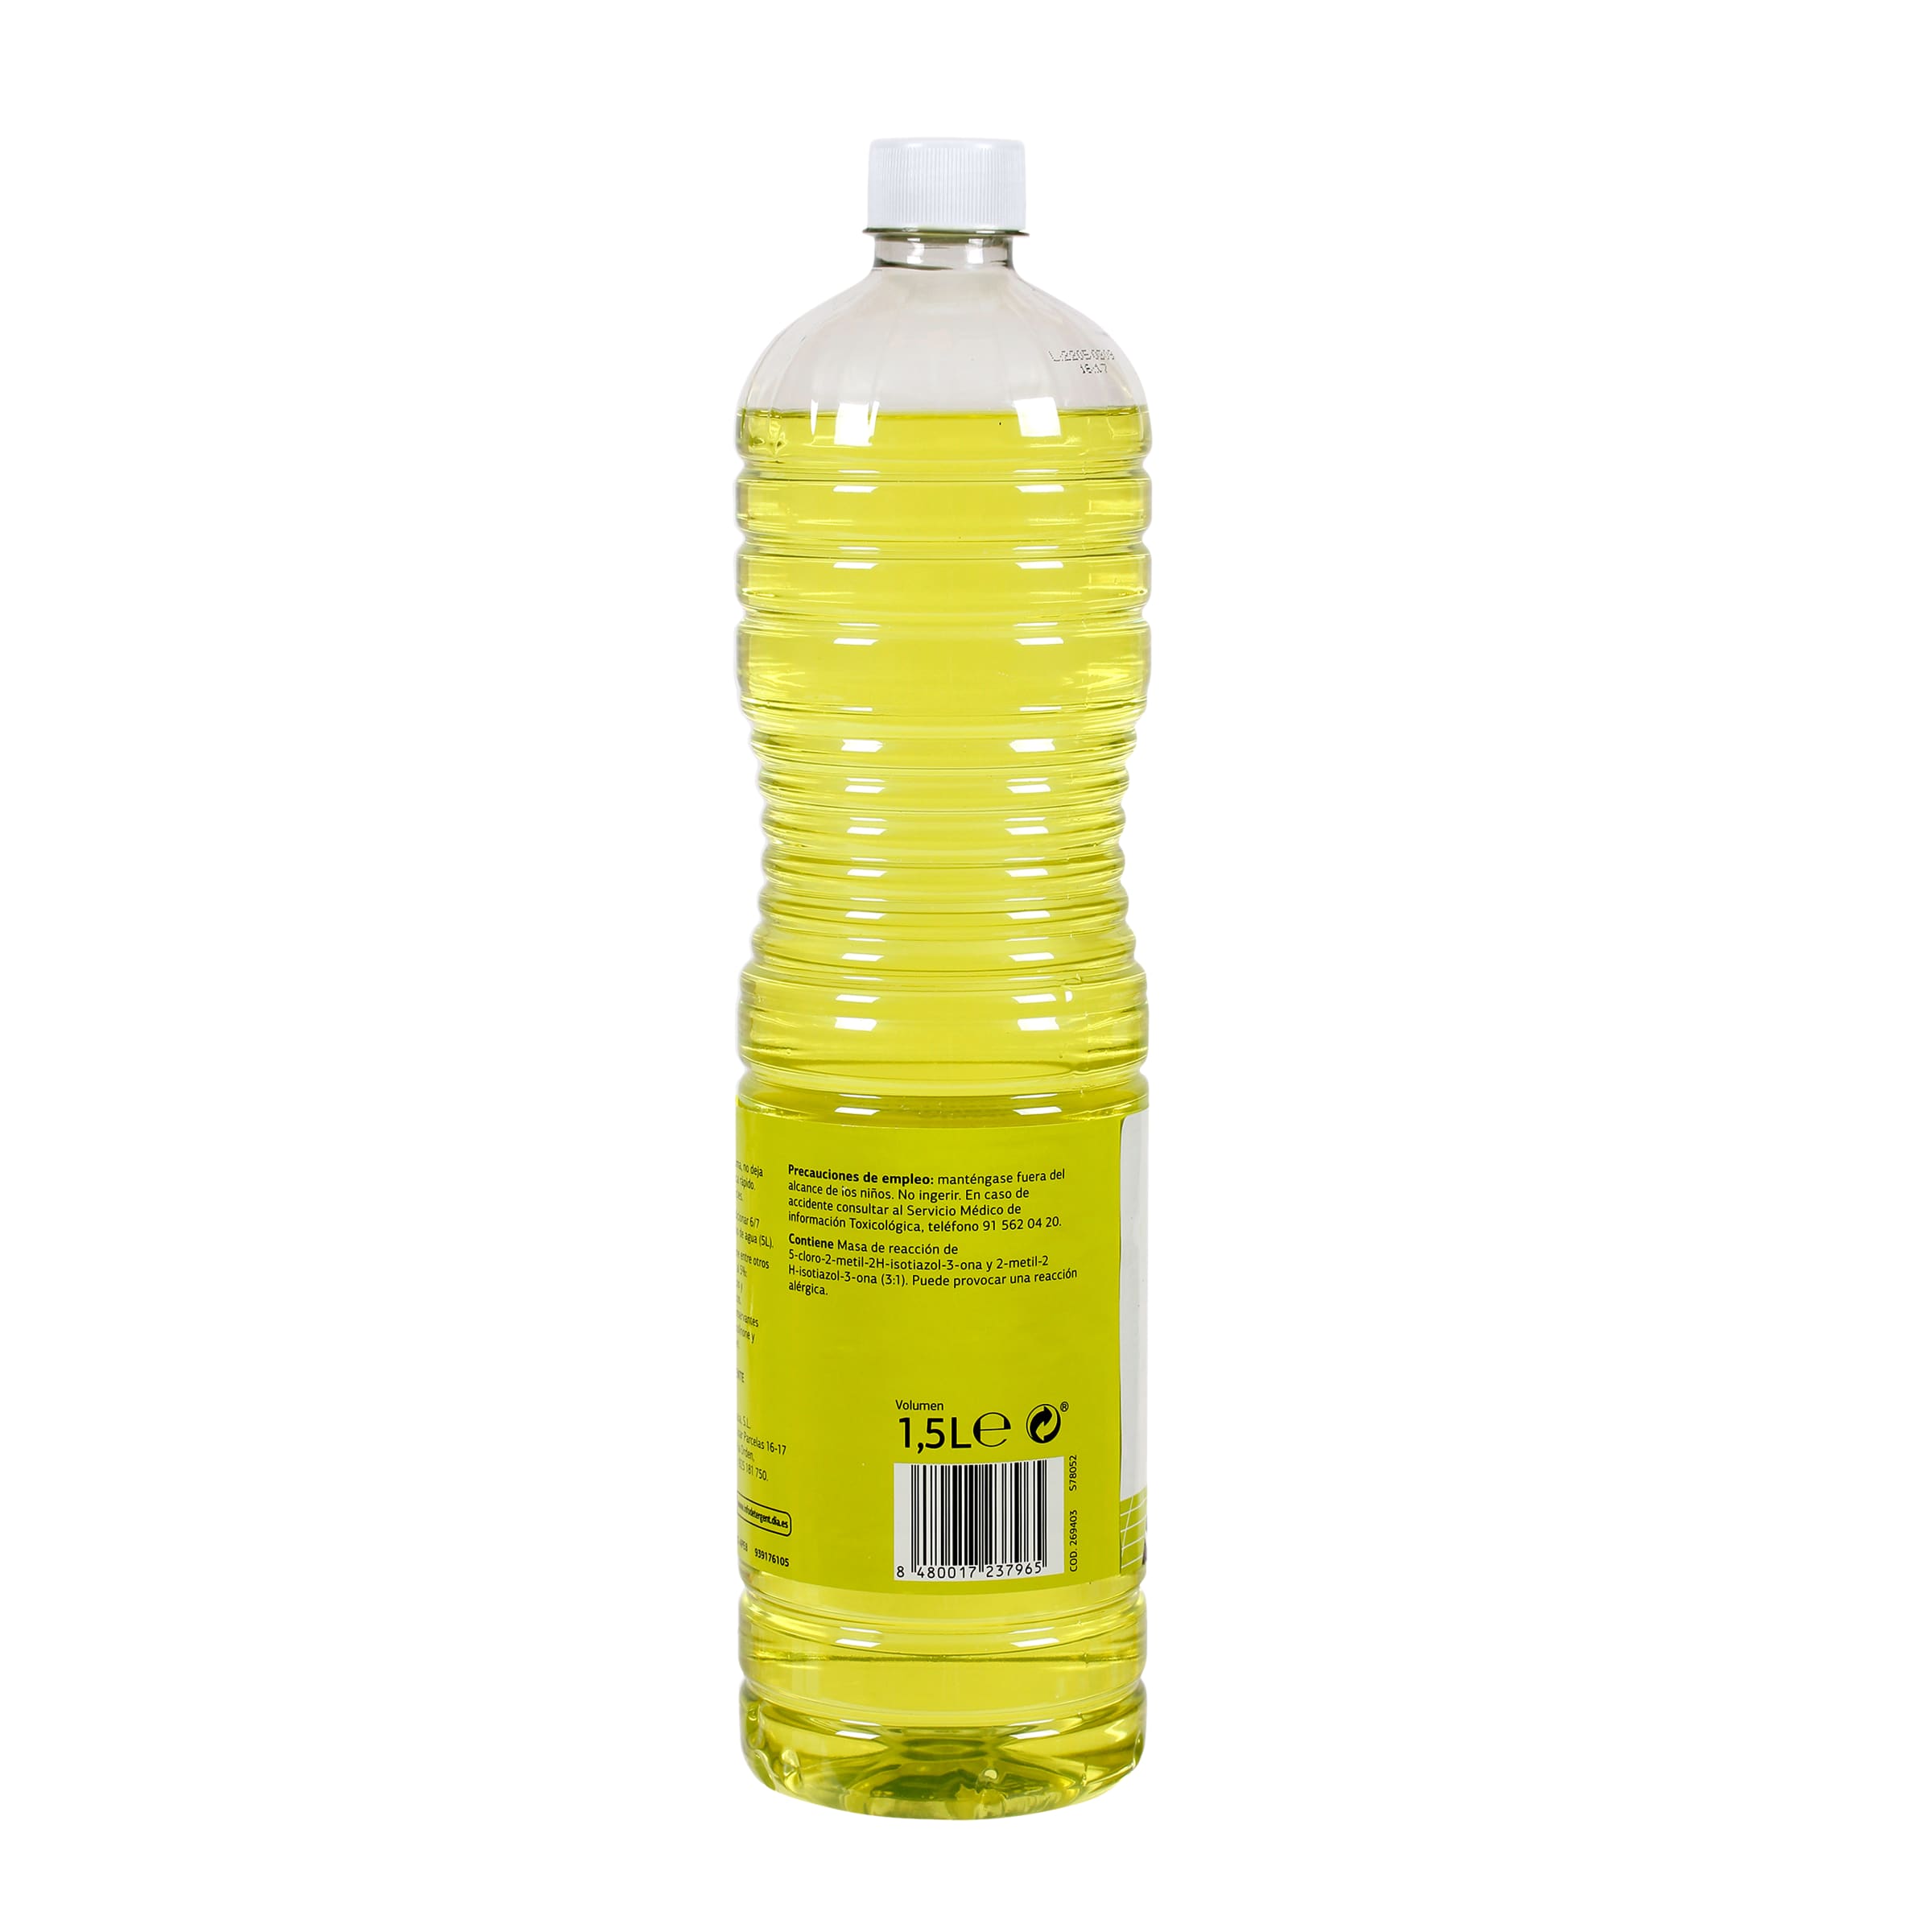 DIA SUPER PACO Friegasuelos aroma limón Botella 1.5 lt